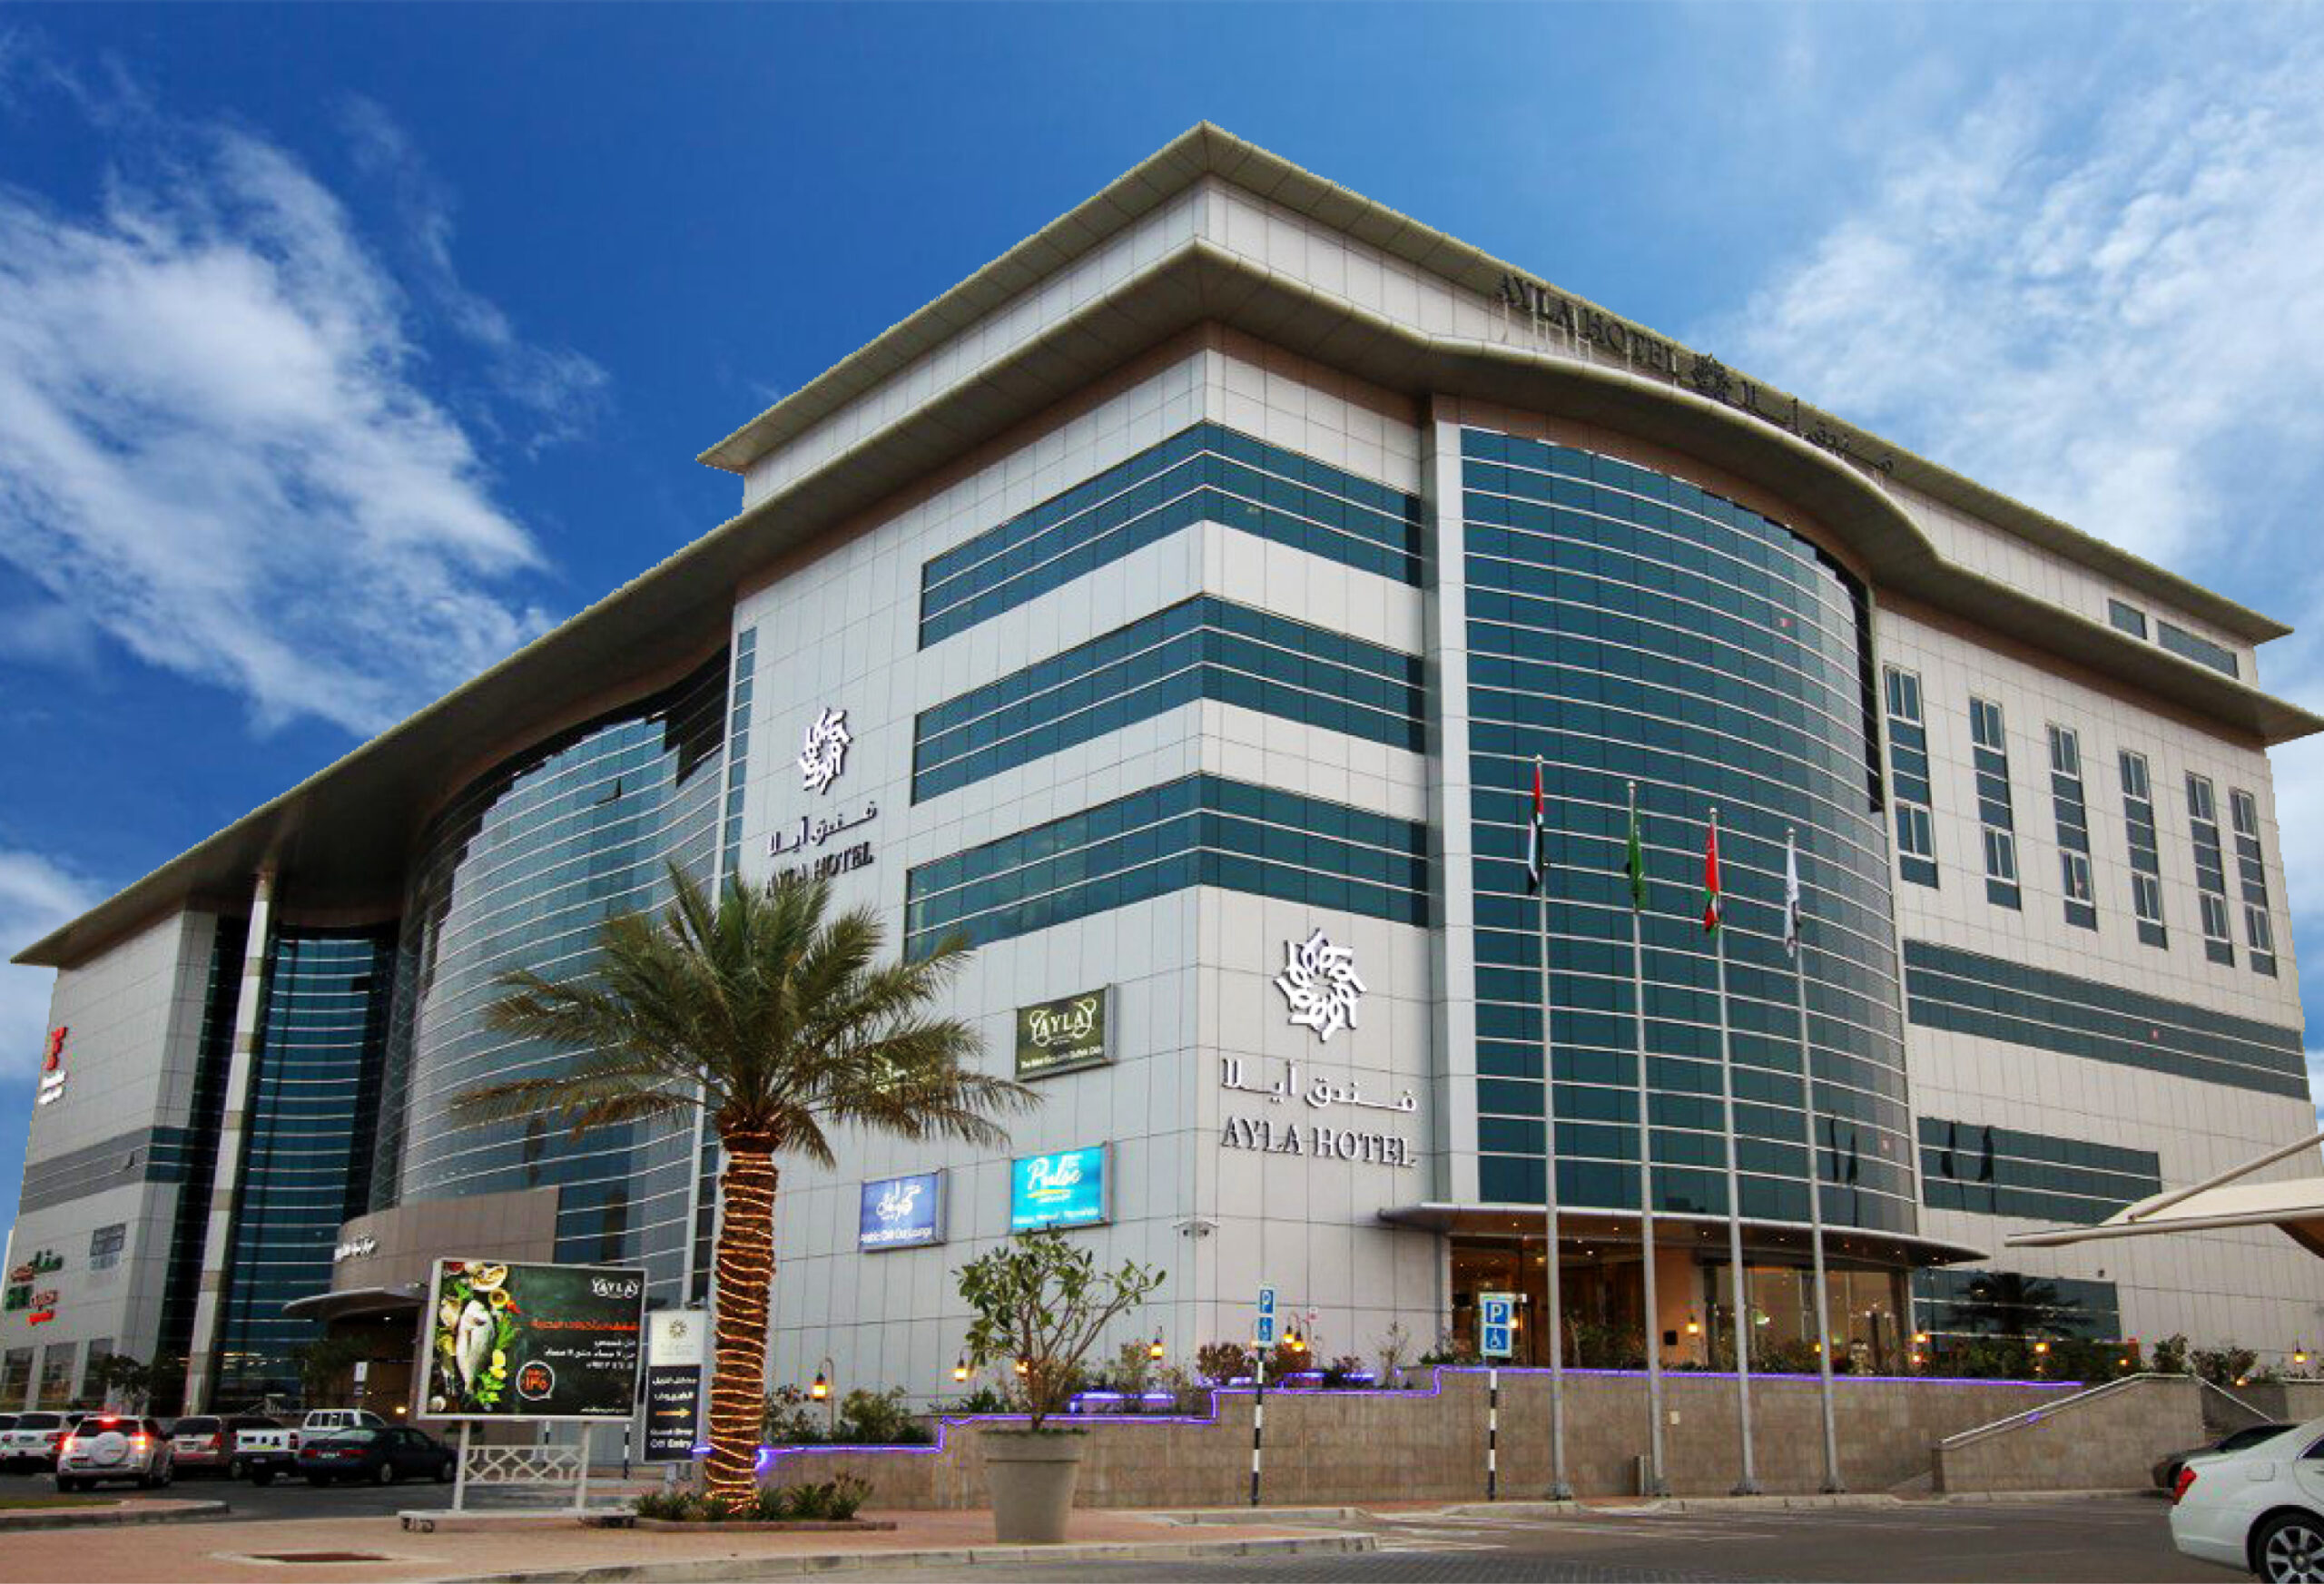 Ayla Hotel Careers - Hospitality Jobs in UAE